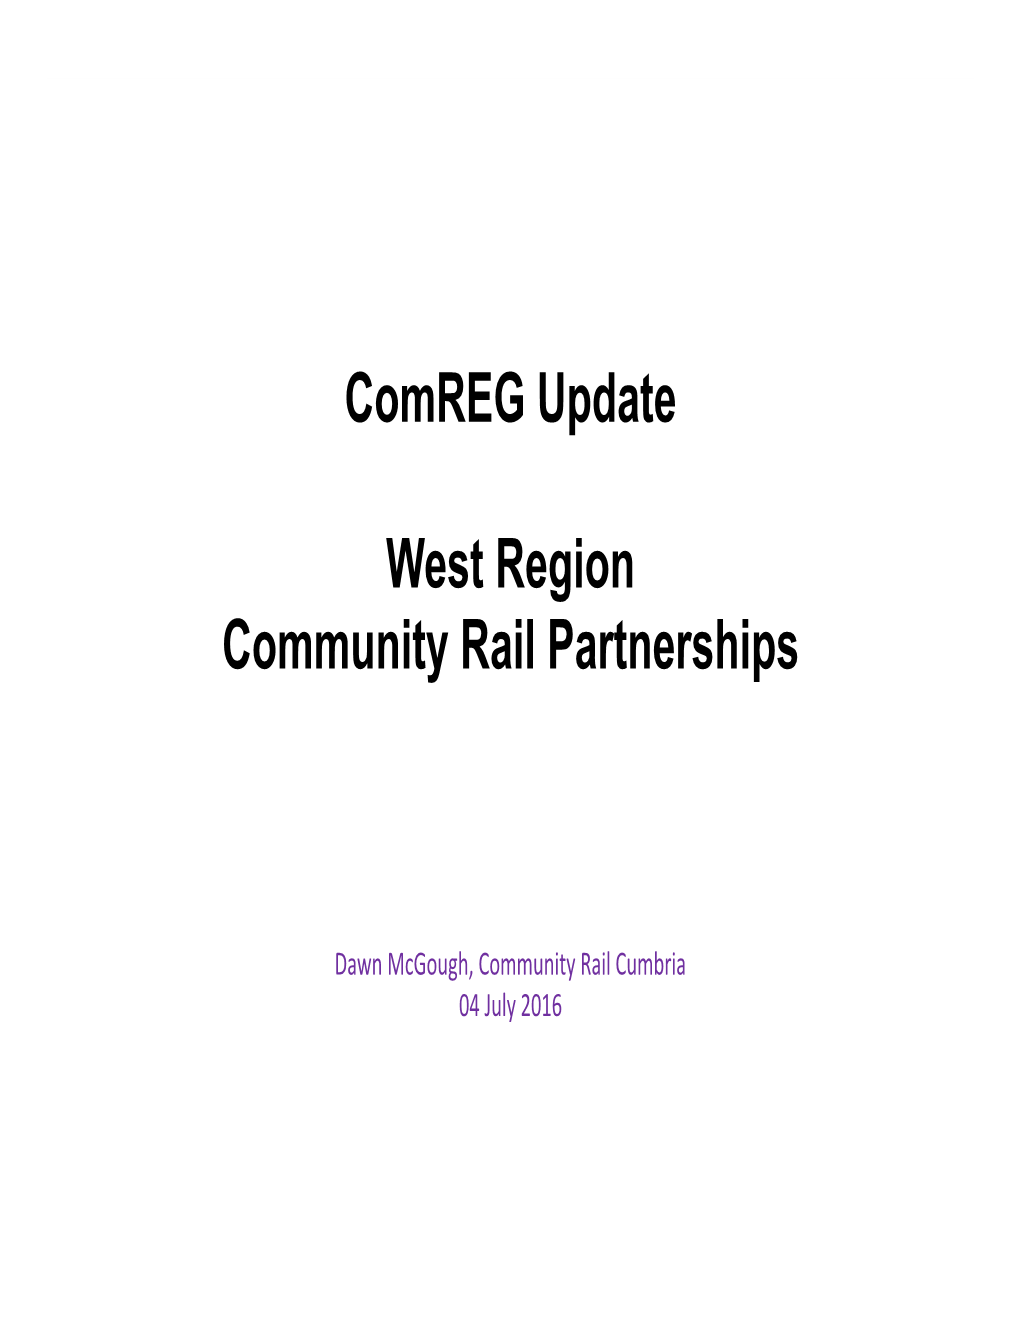 West Region Comreg Update